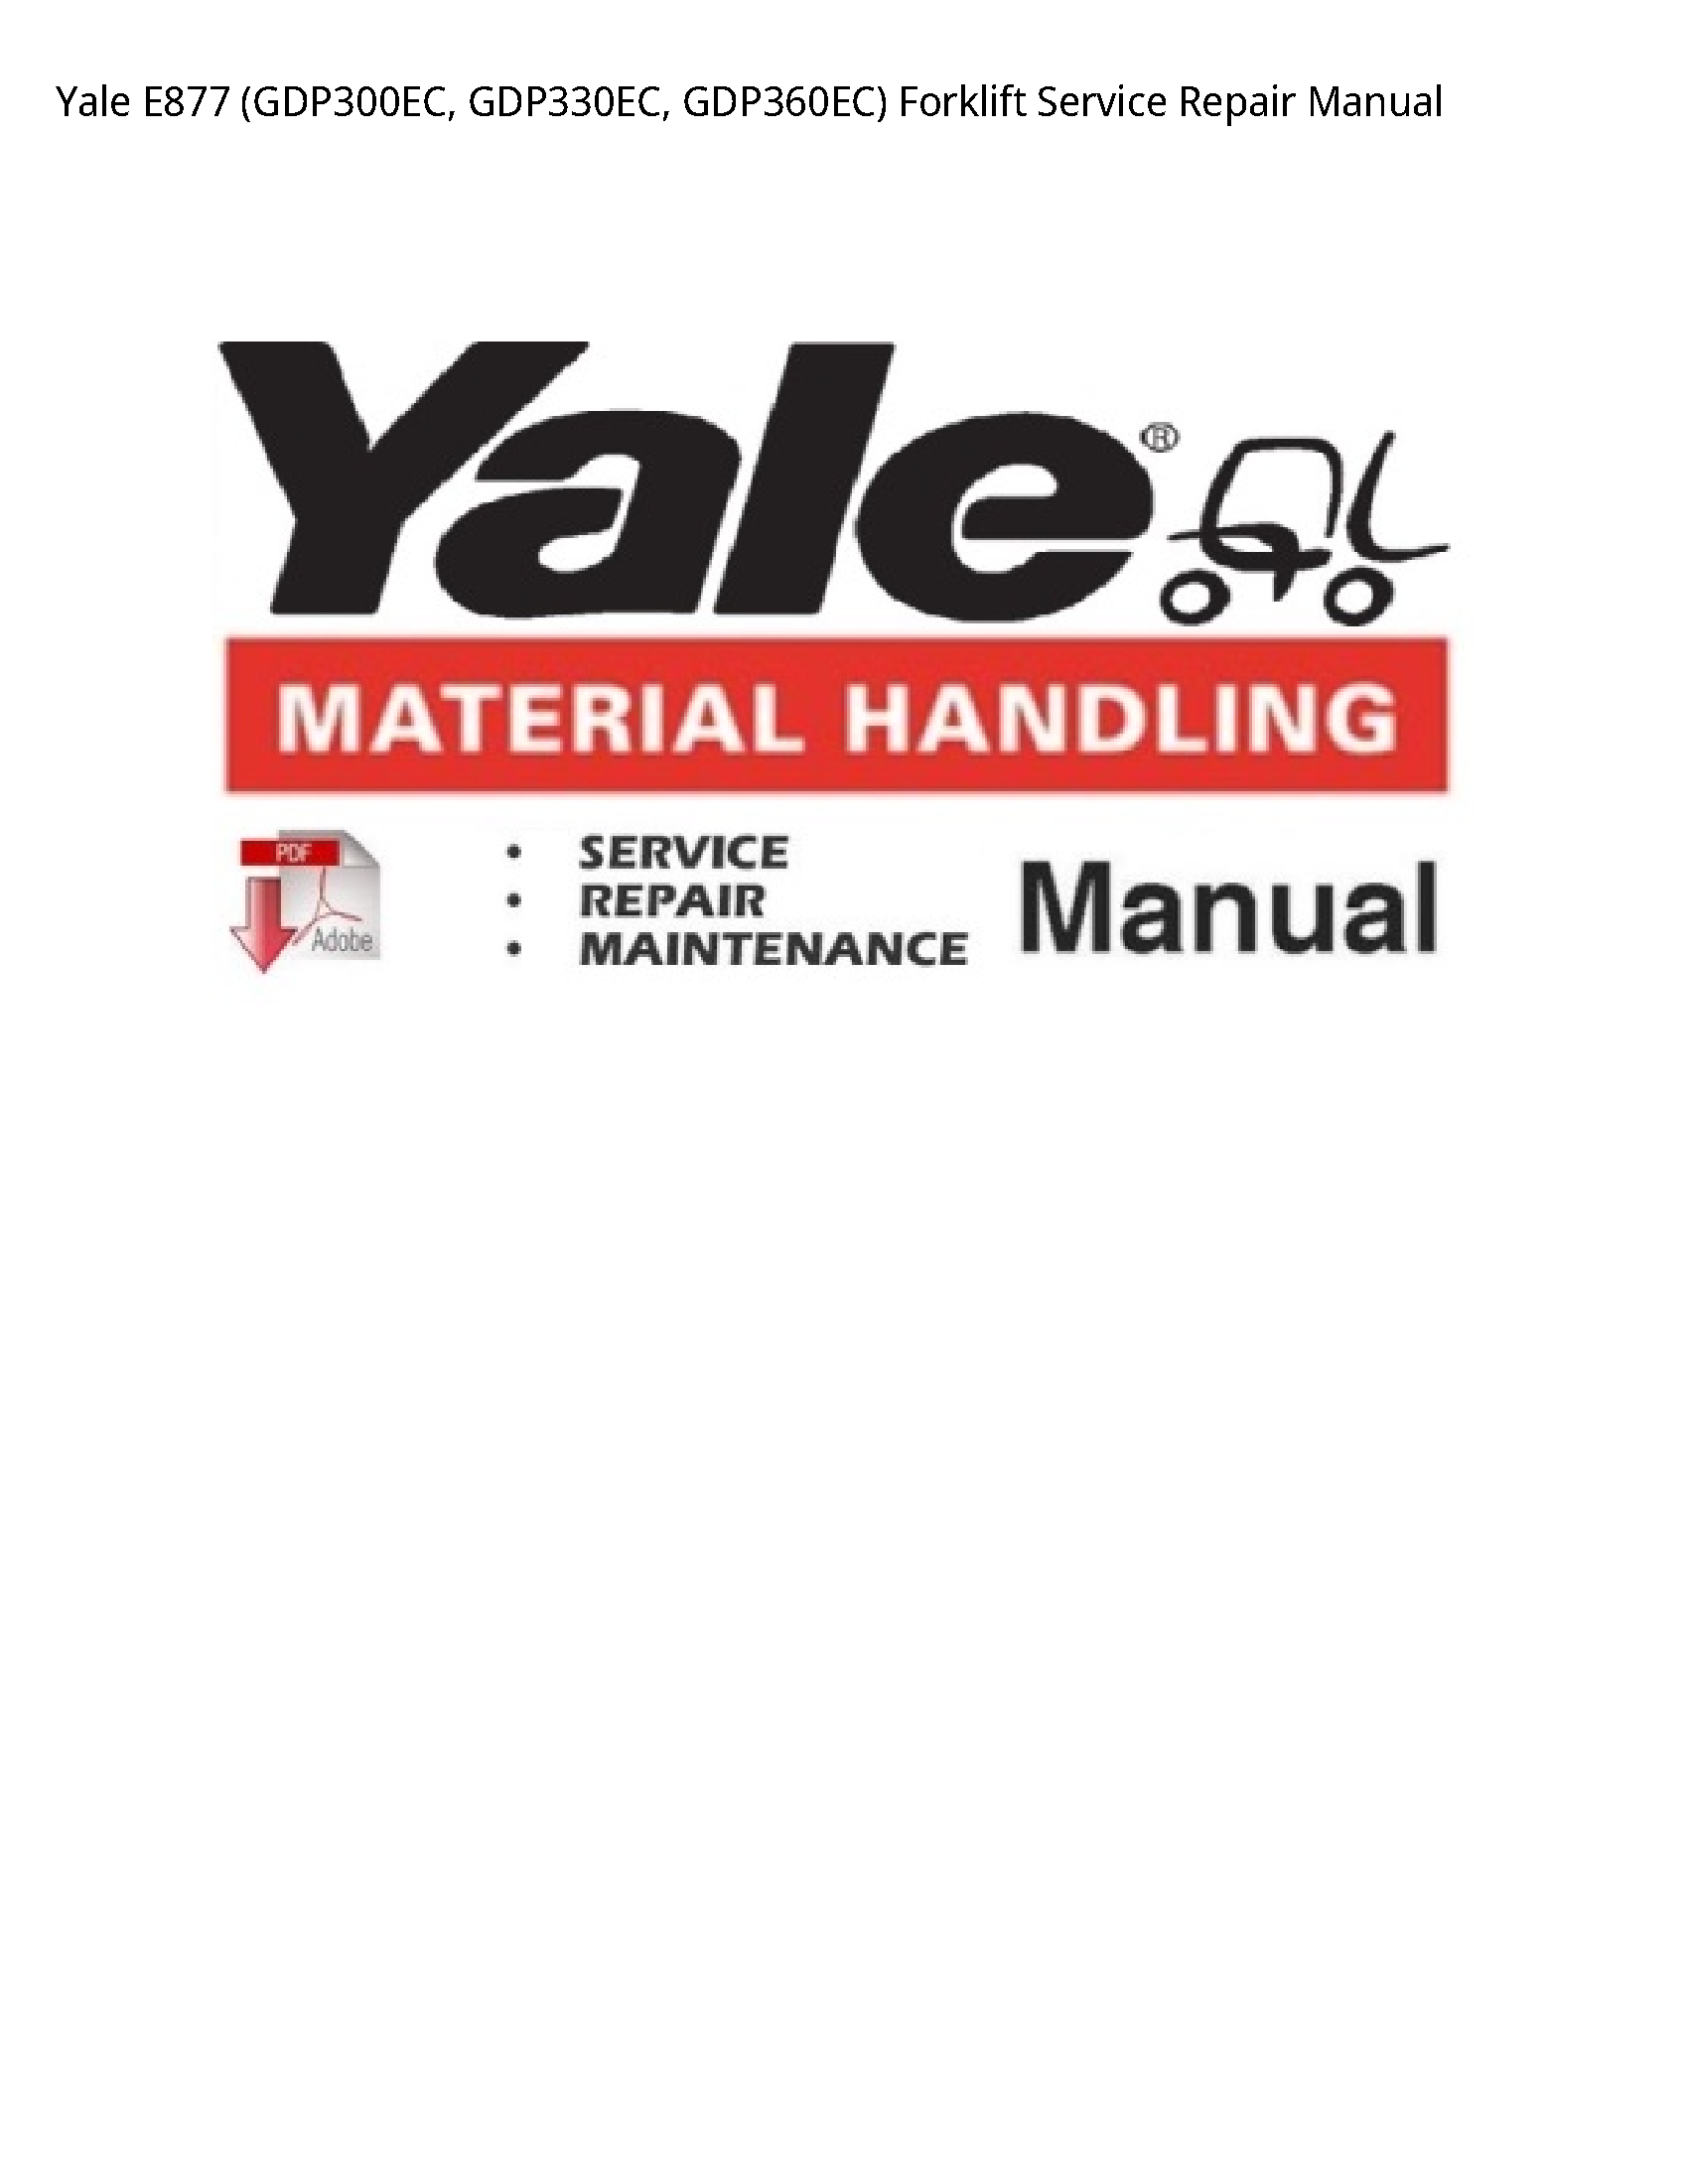 Yale E877 Forklift manual